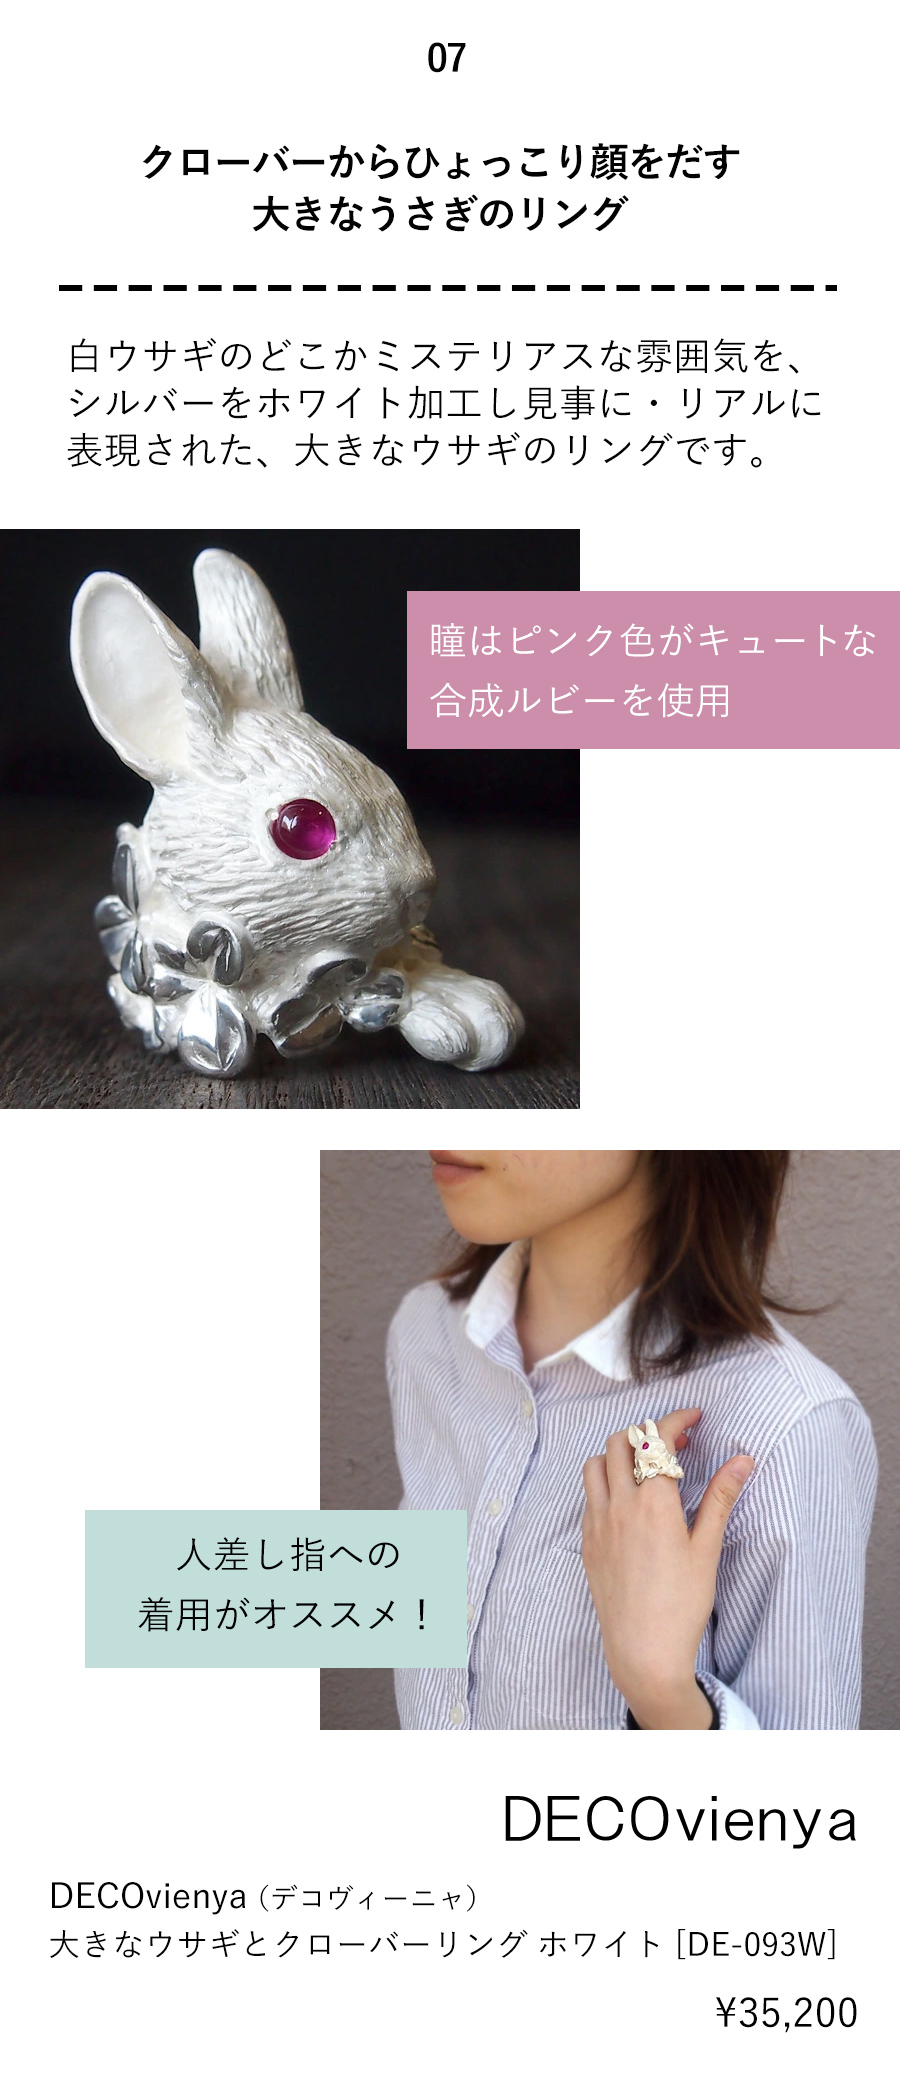 DECOvienya handmade accessories big rabbit and clover ring